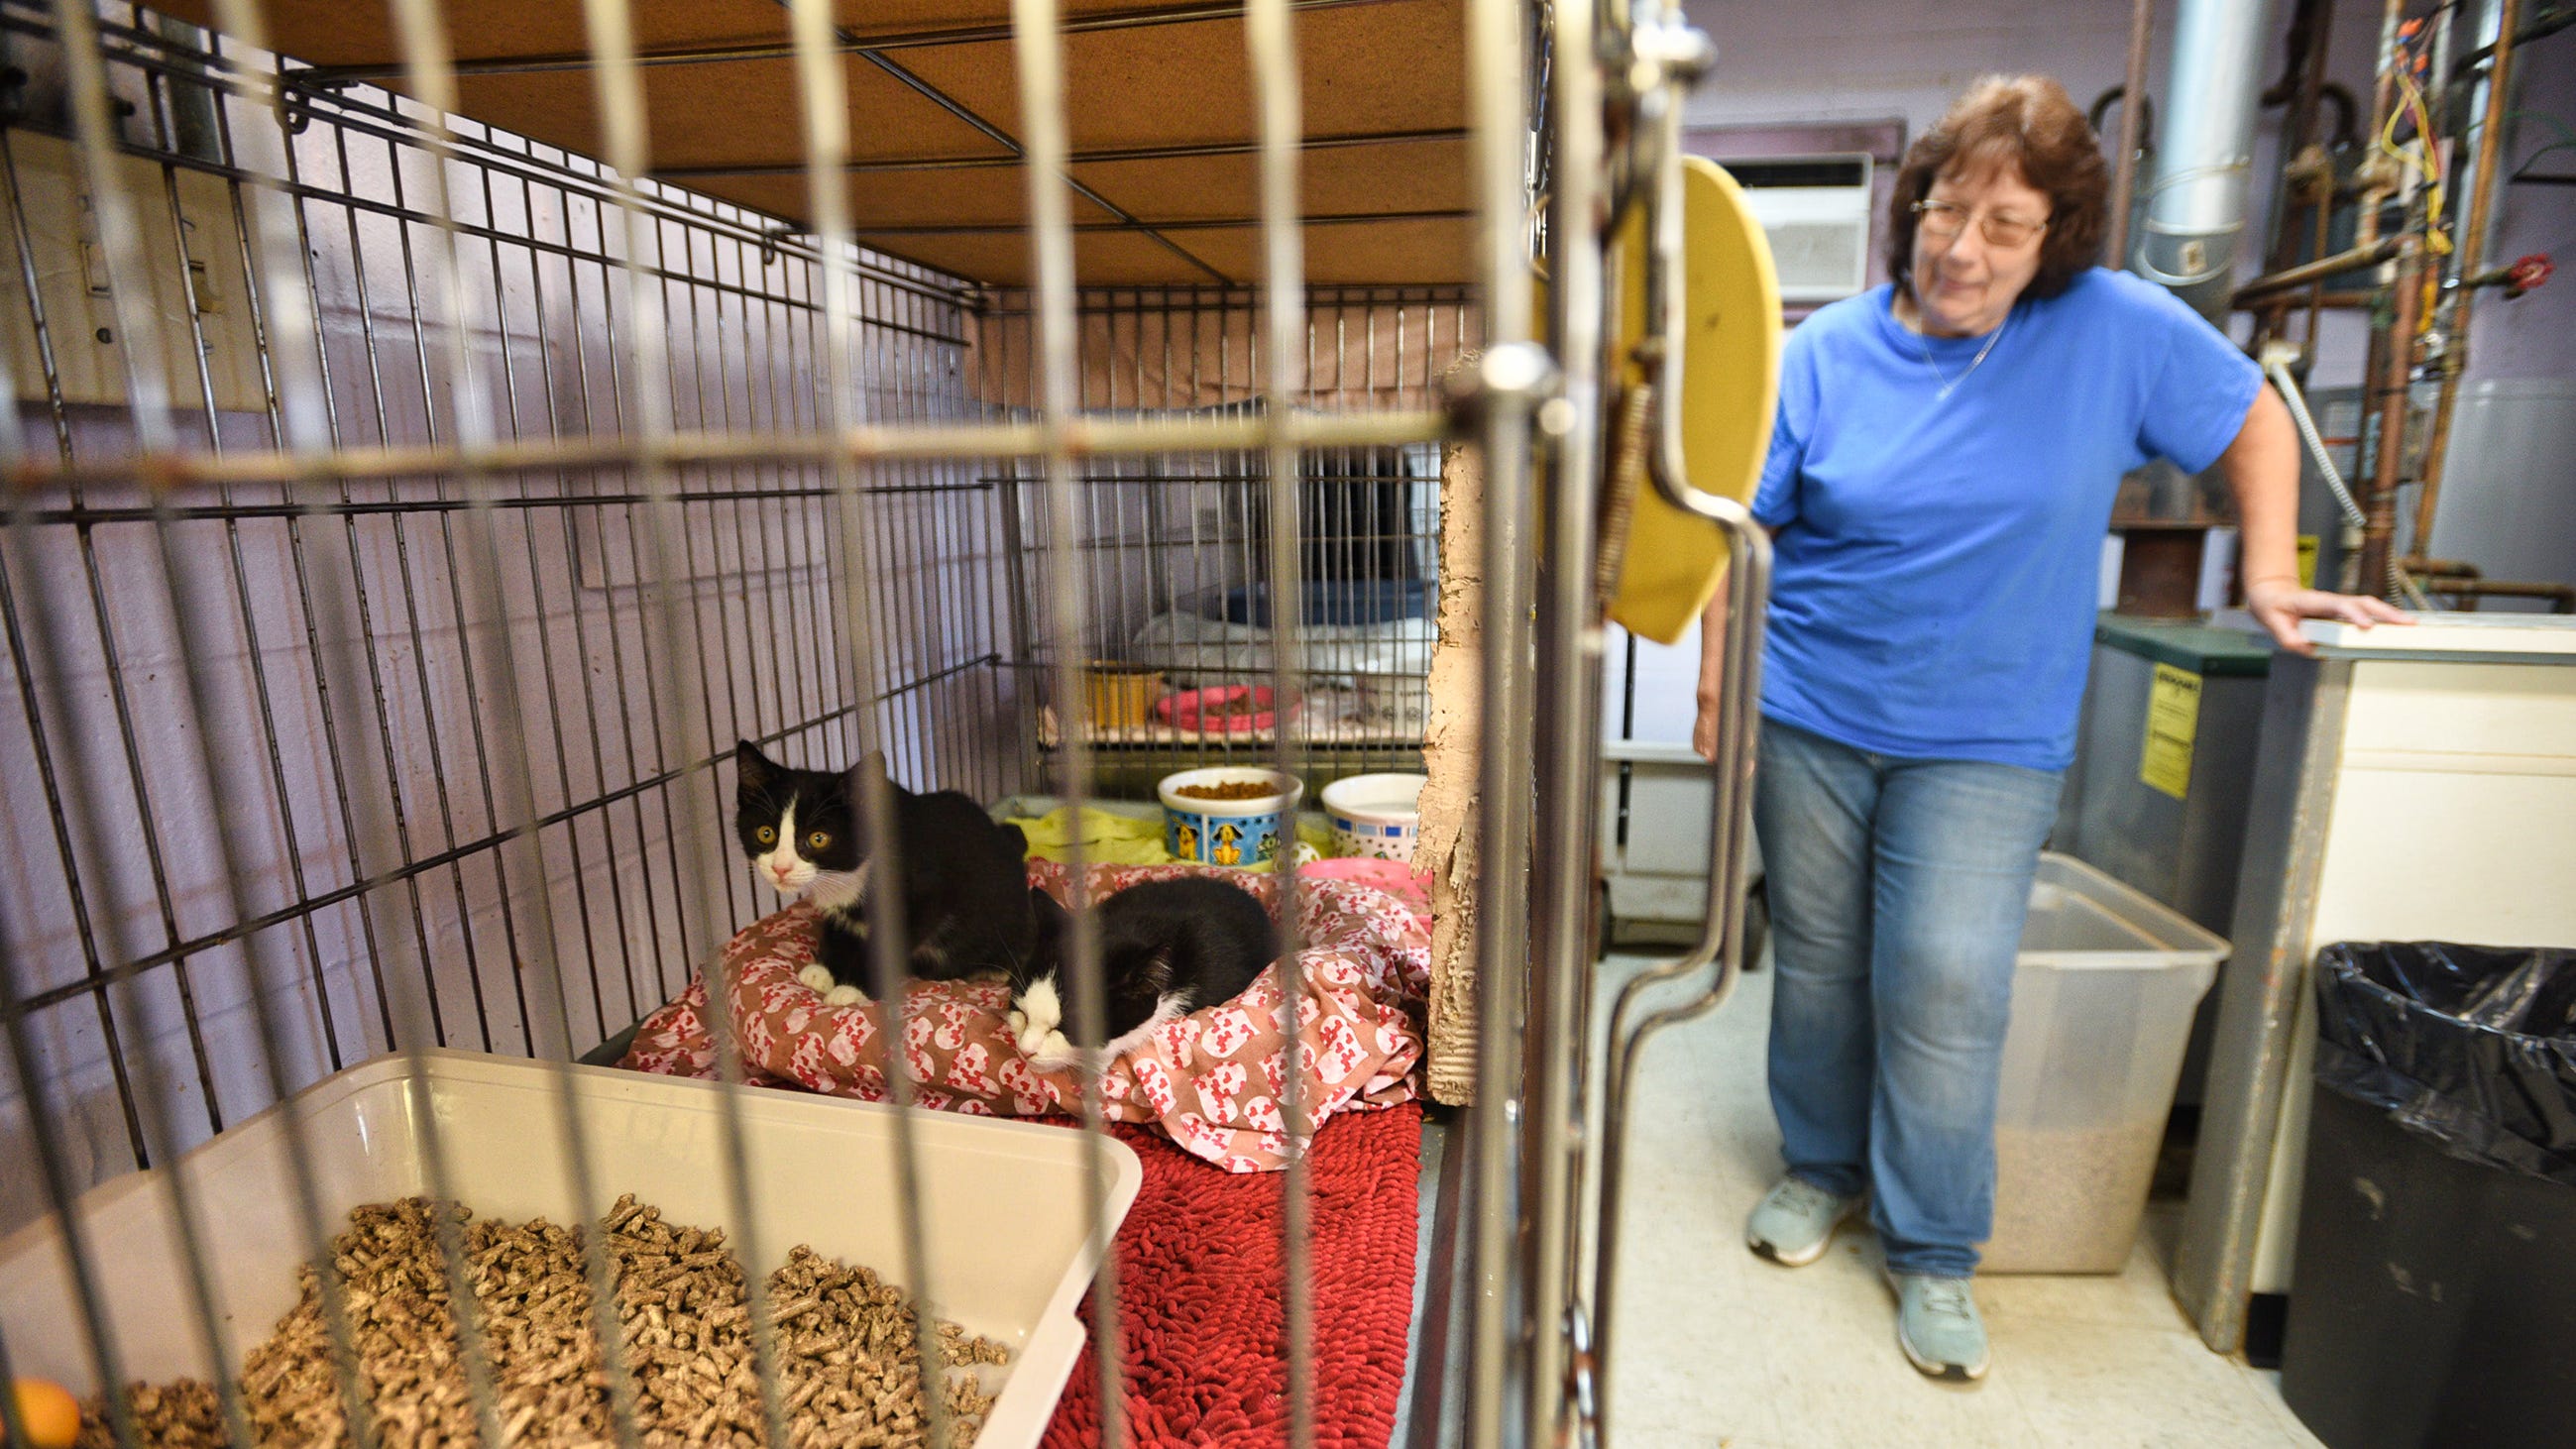 Englewood NJ animal shelter needs volunteers, pet supplies